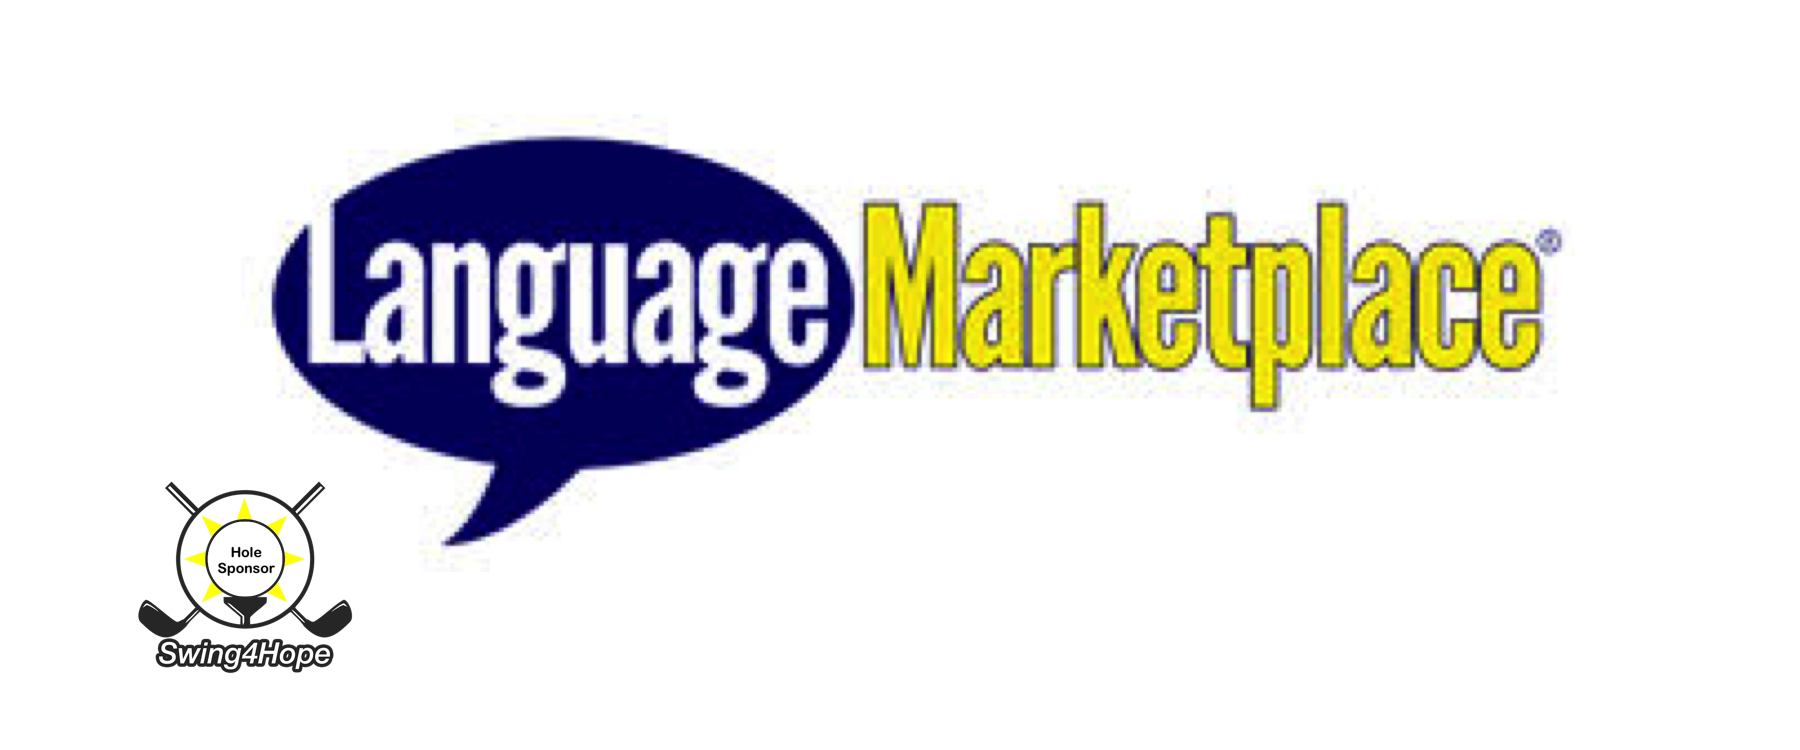 LanguageMarketplace.png